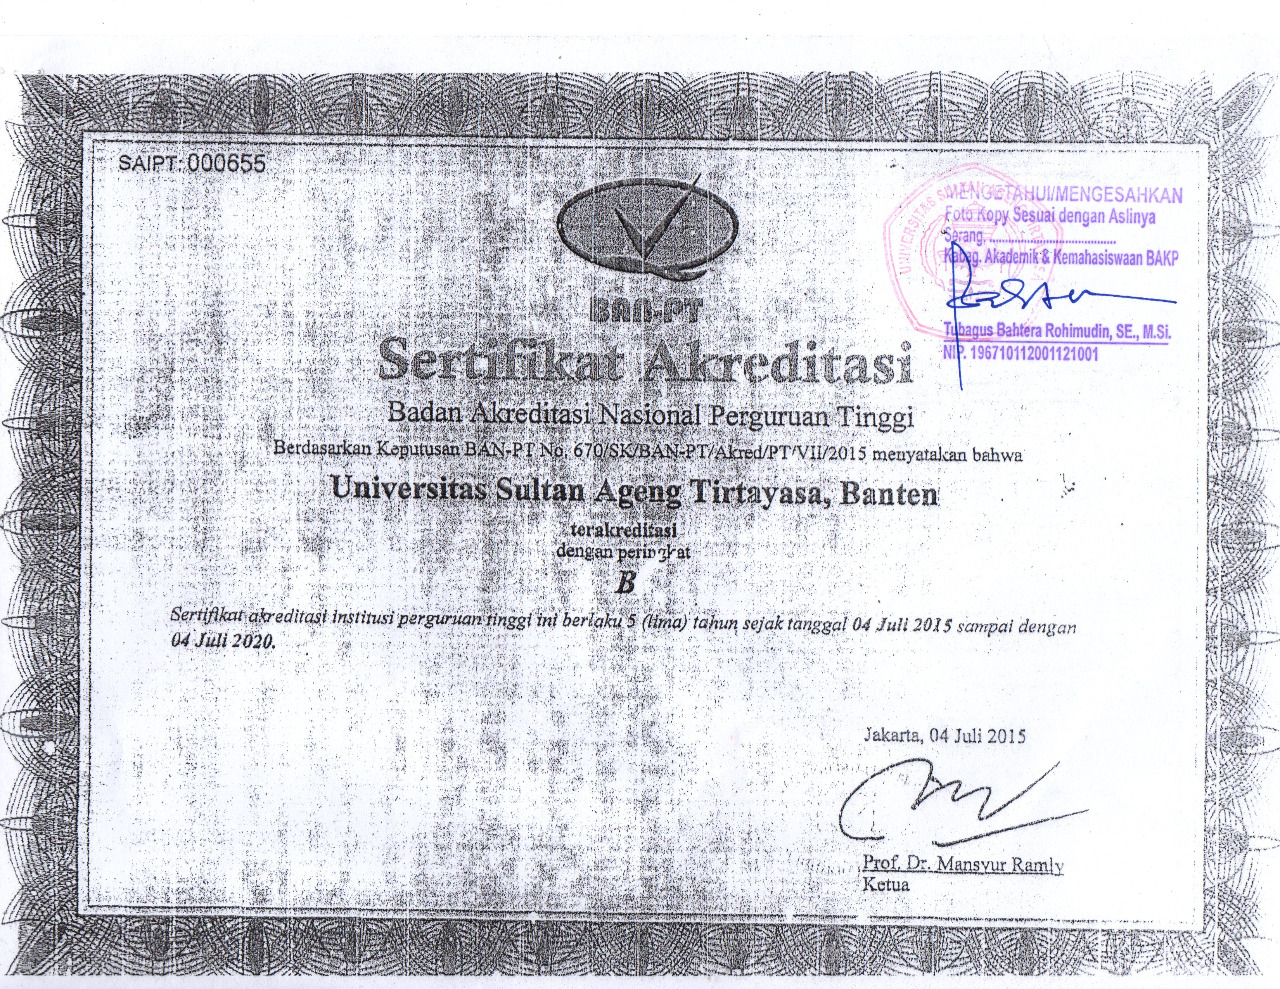 Pgsd universitas akreditasi 2020 terbuka sertifikat s1 Rinto Kusmiran: